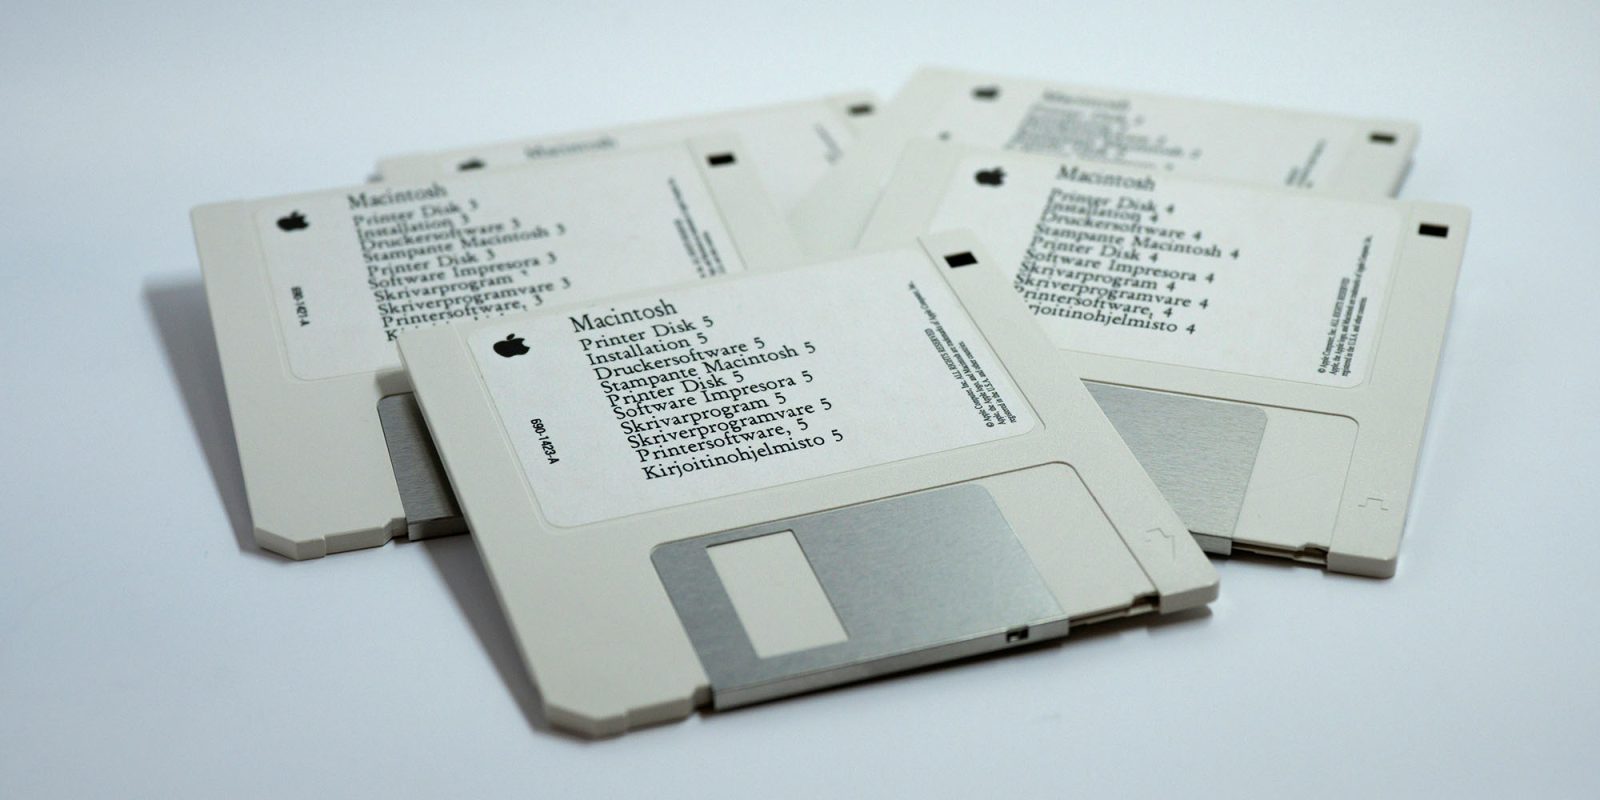 Floppy disk drives | Macintosh floppy disks